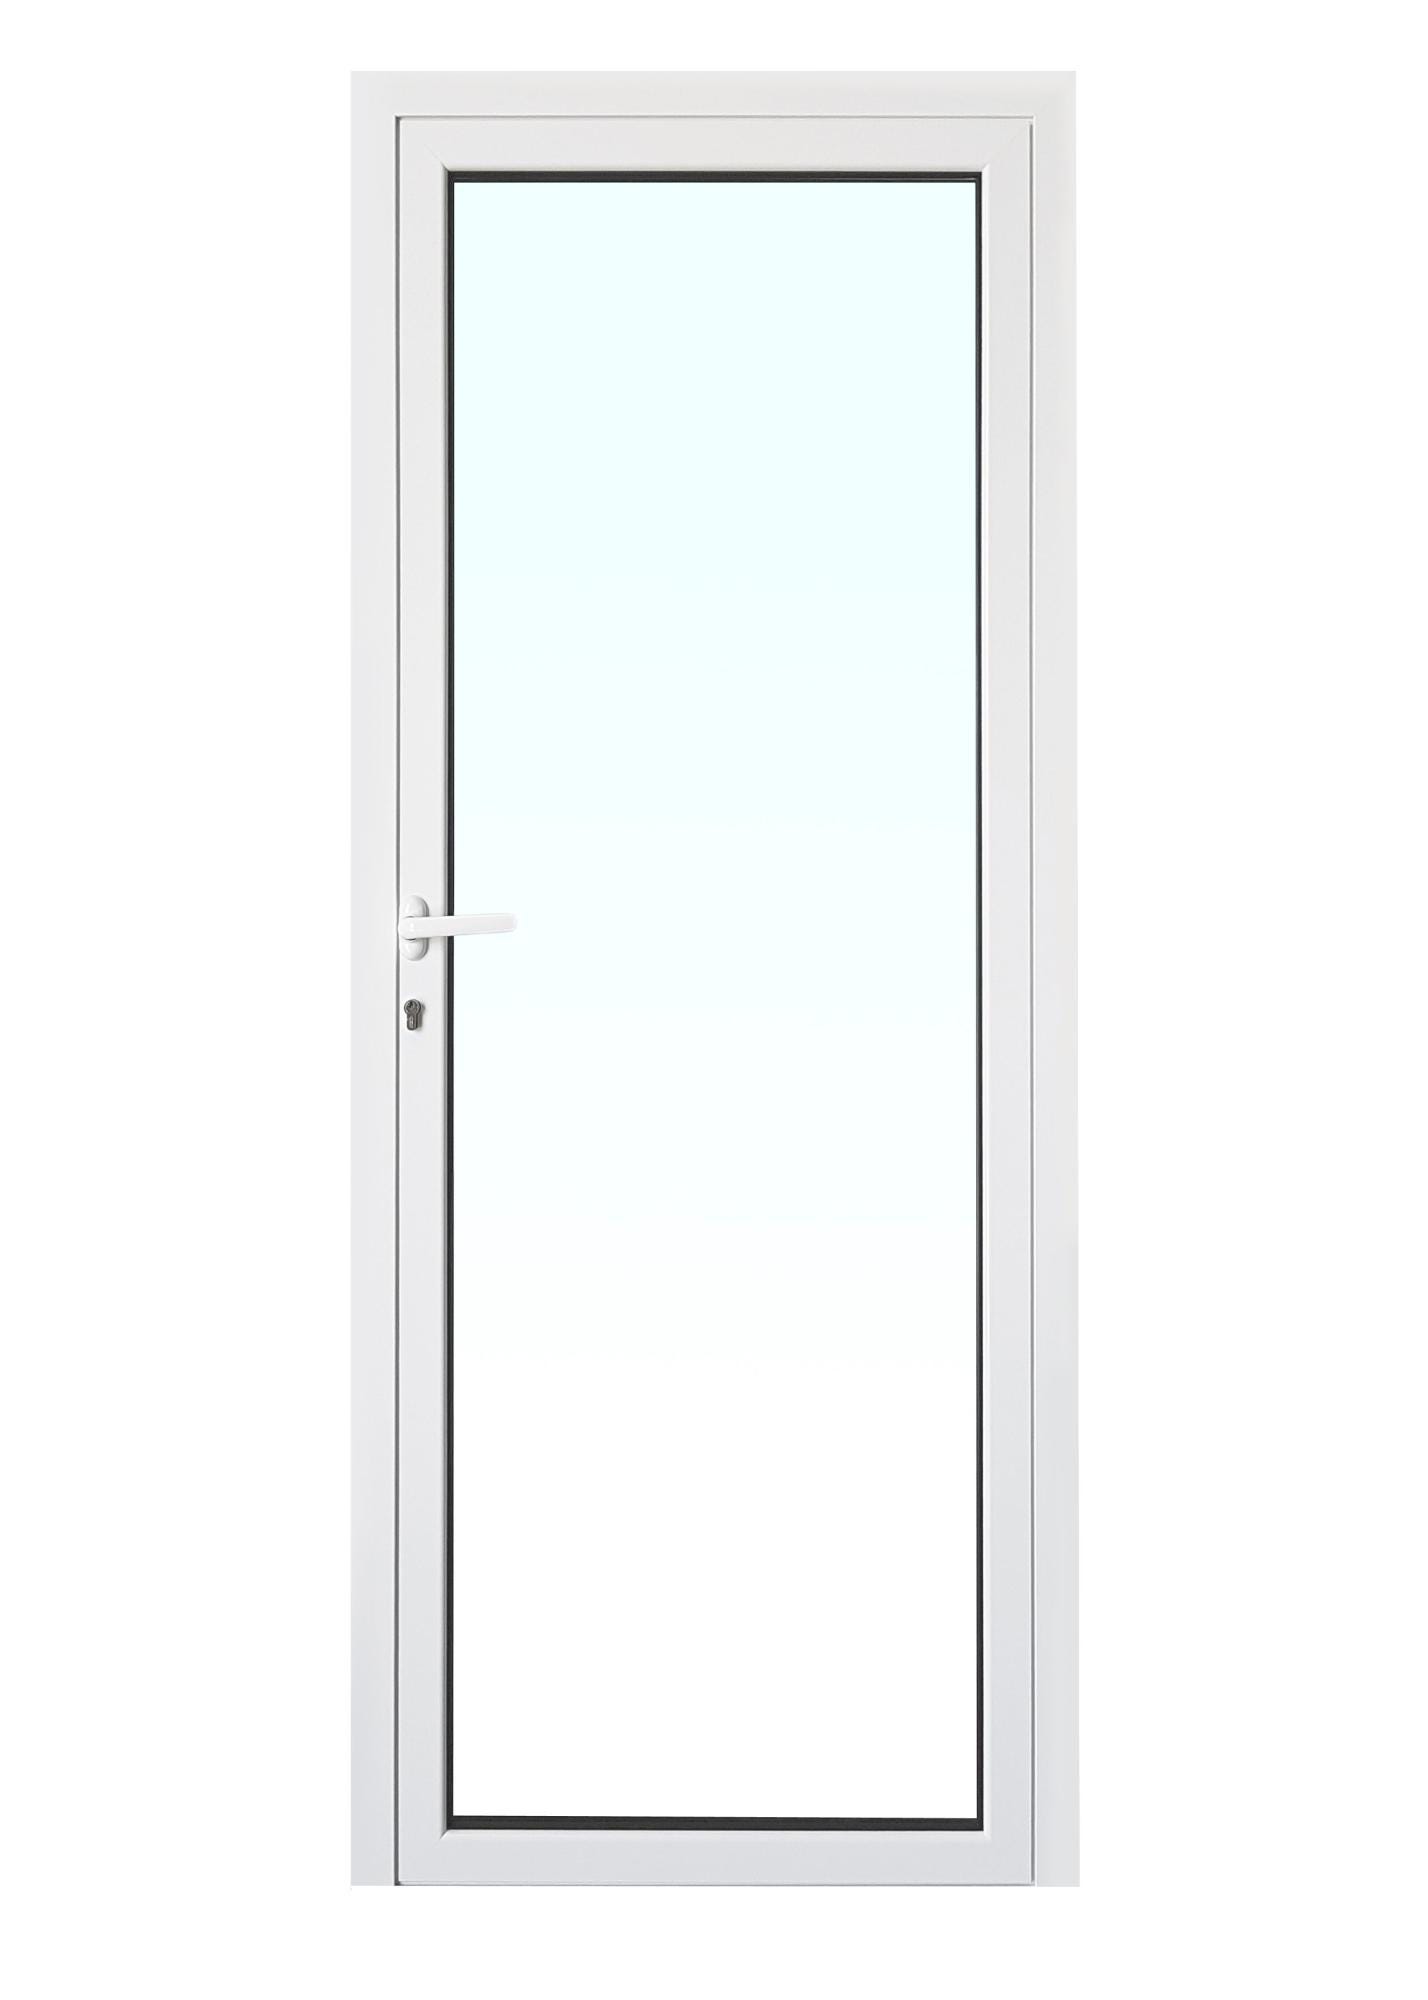 Puerta aluminio ARTENS practicable de 80x210cm